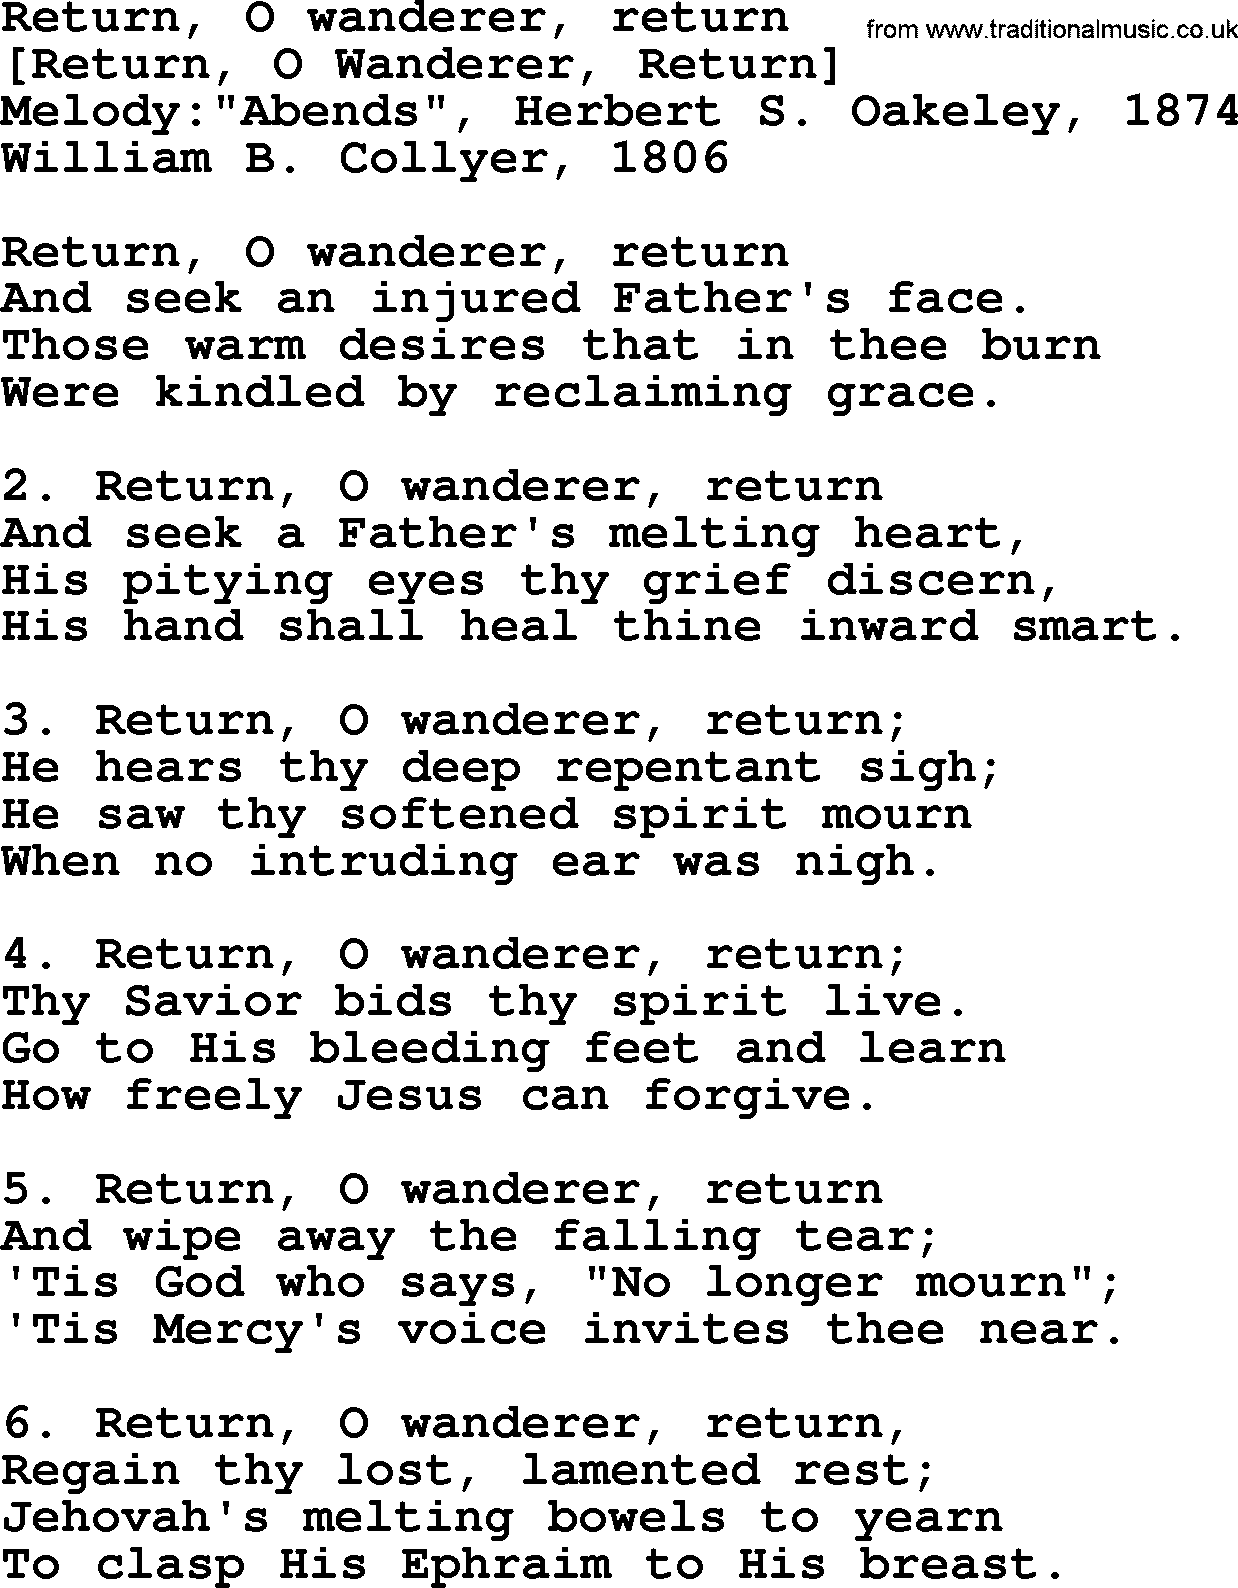 Old English Song: Return, O Wanderer, Return lyrics